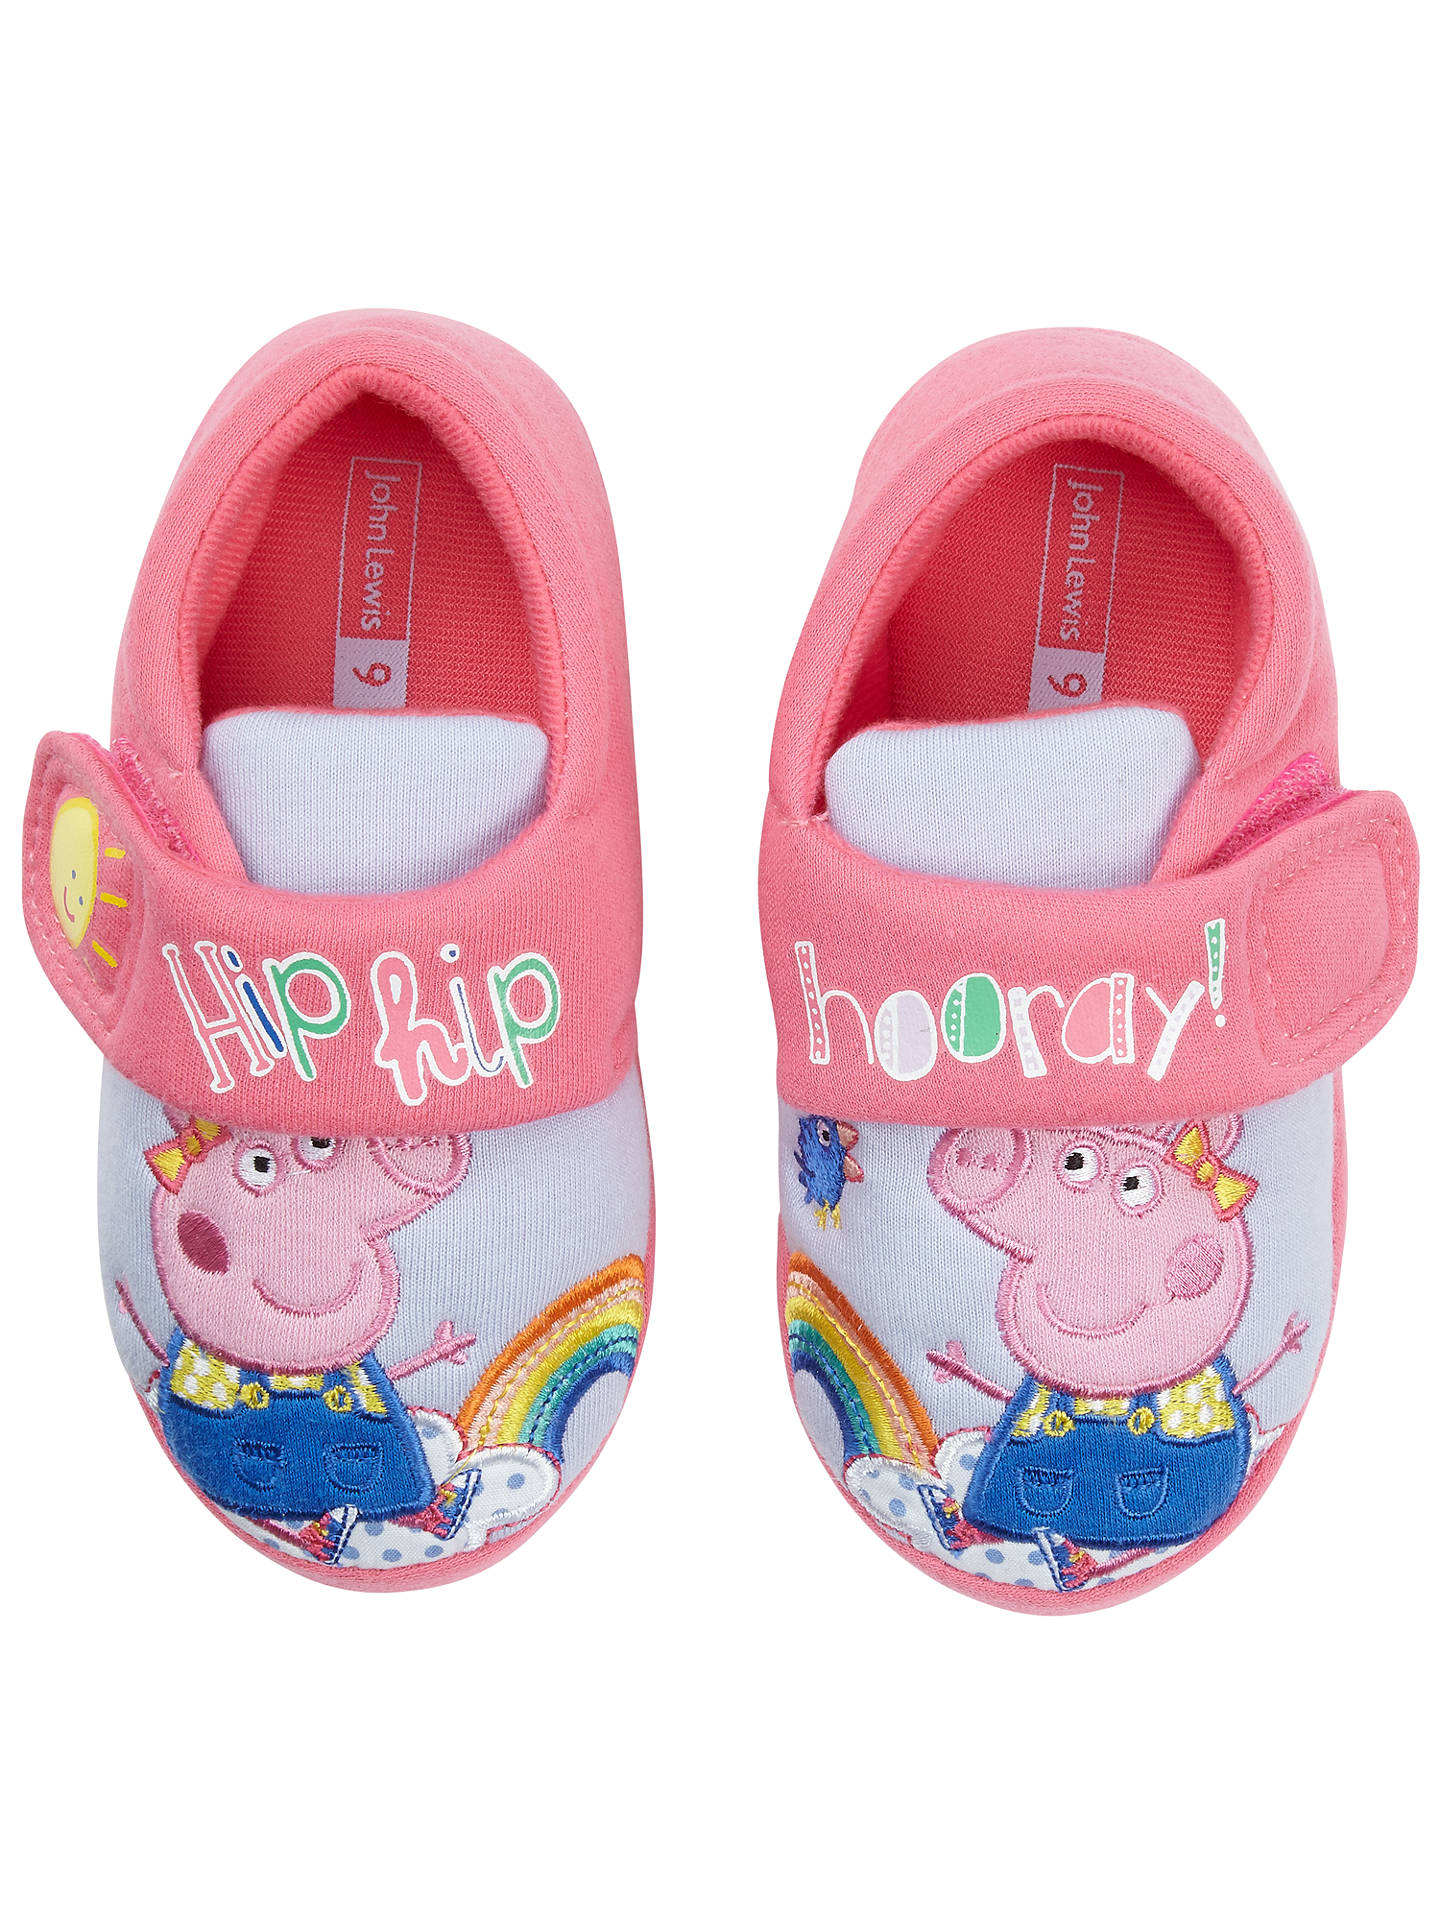 Peppa Pig Children's Rainbow Slippers, Pink at John Lewis & Partners